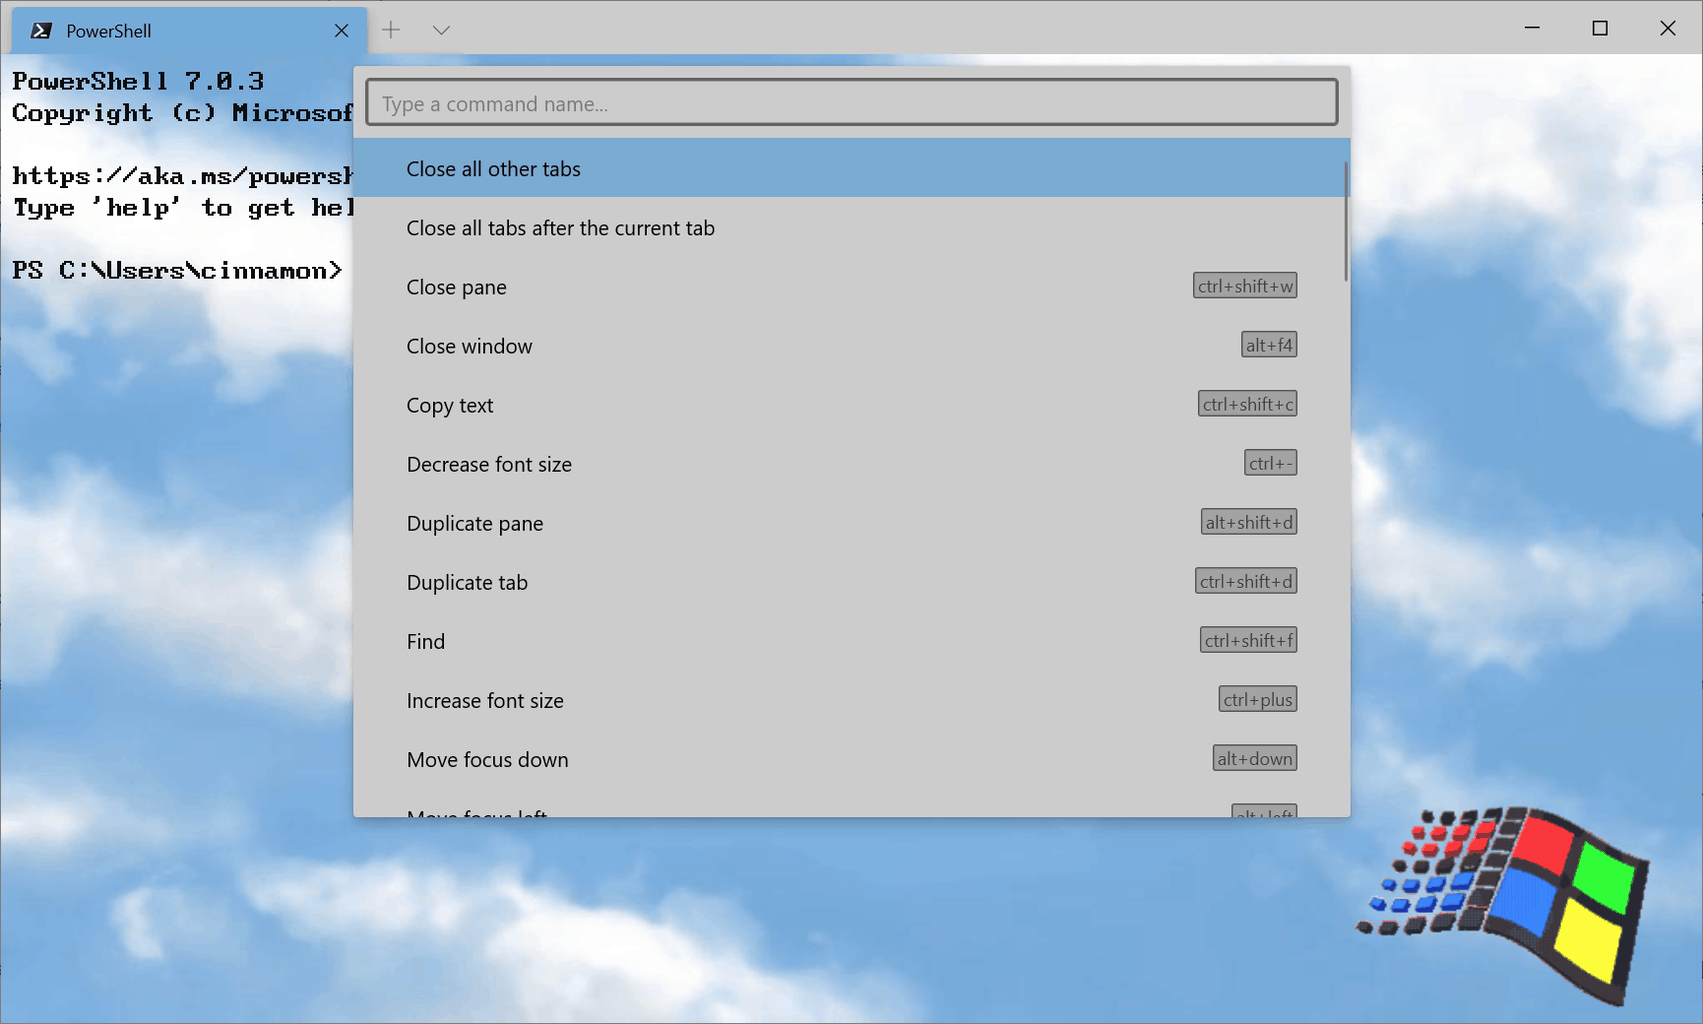 Windows Terminal version 1.3